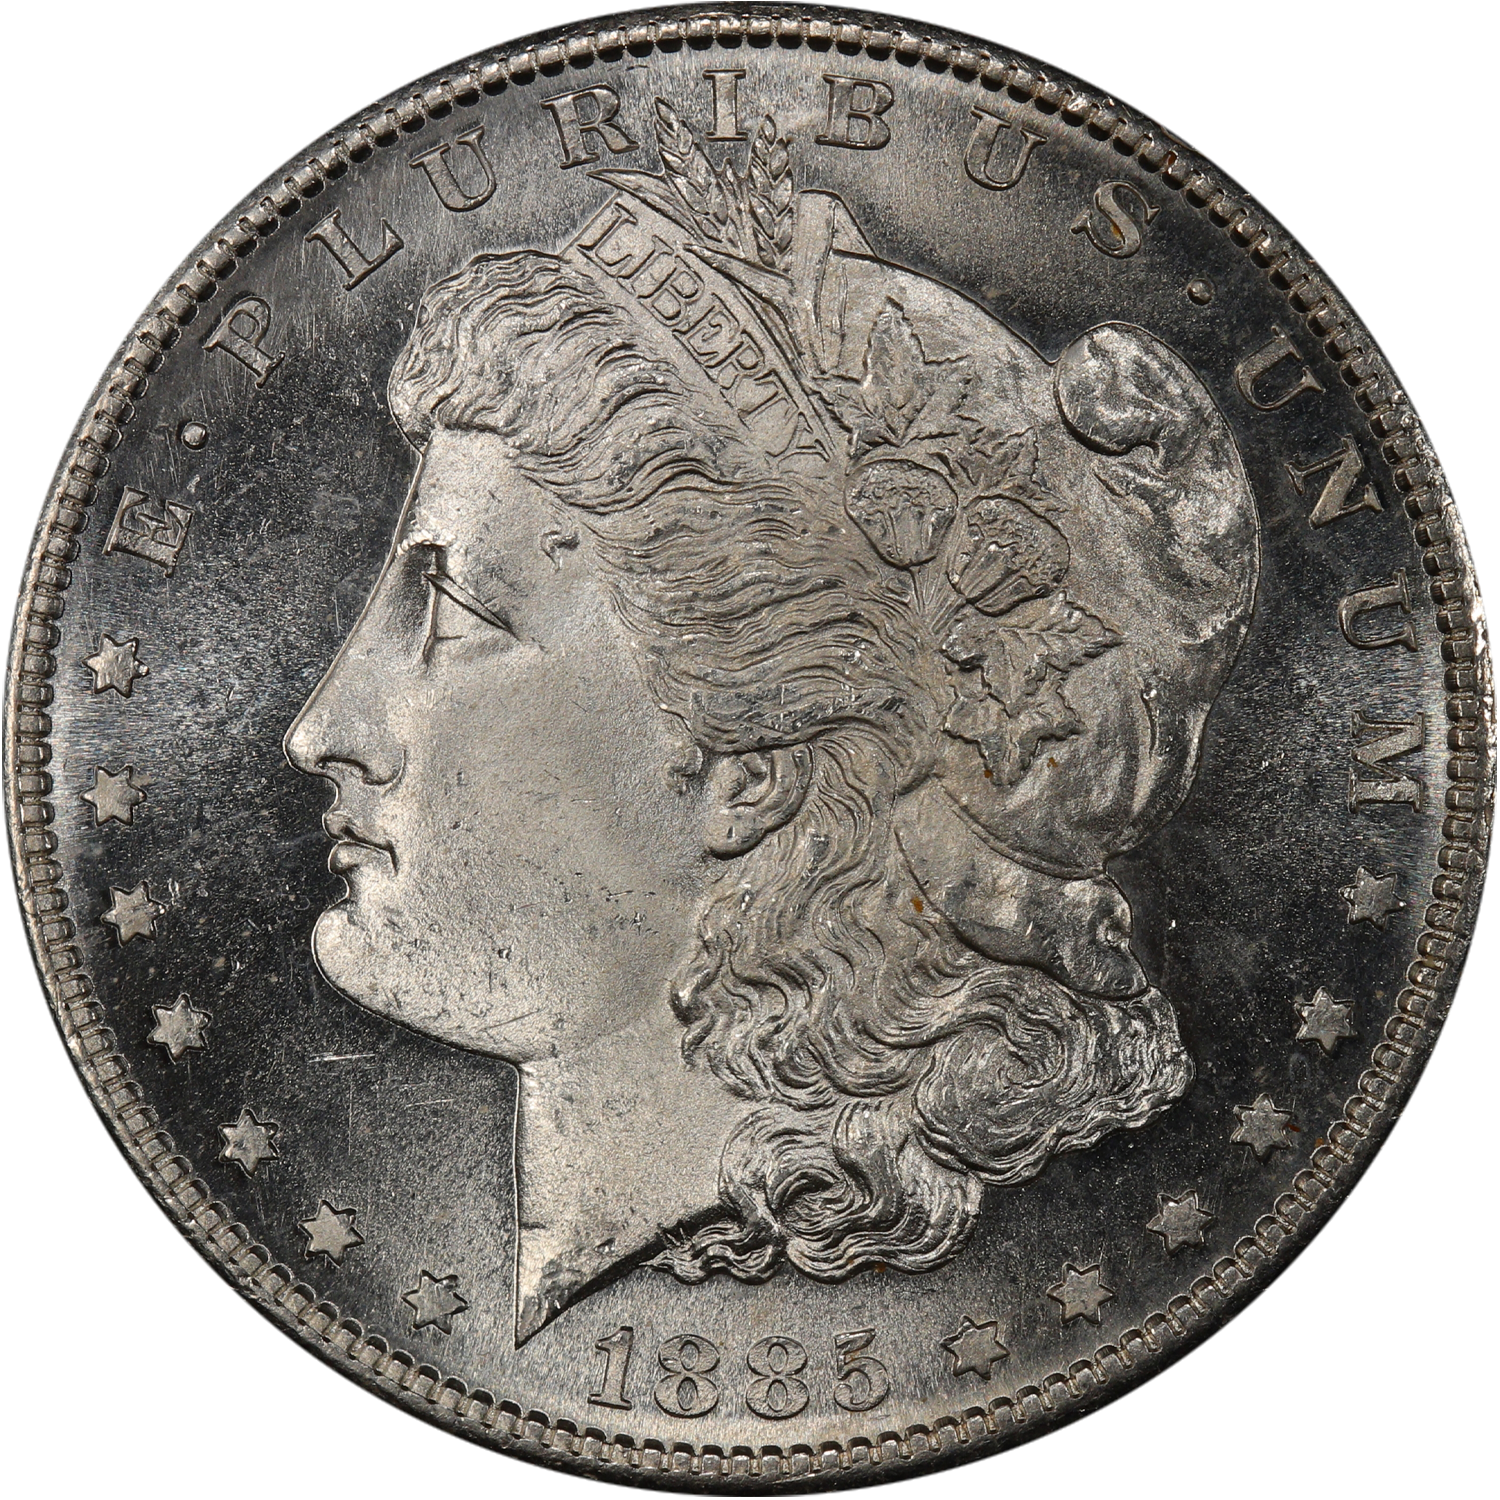 1885 s morgan dollar price guide value